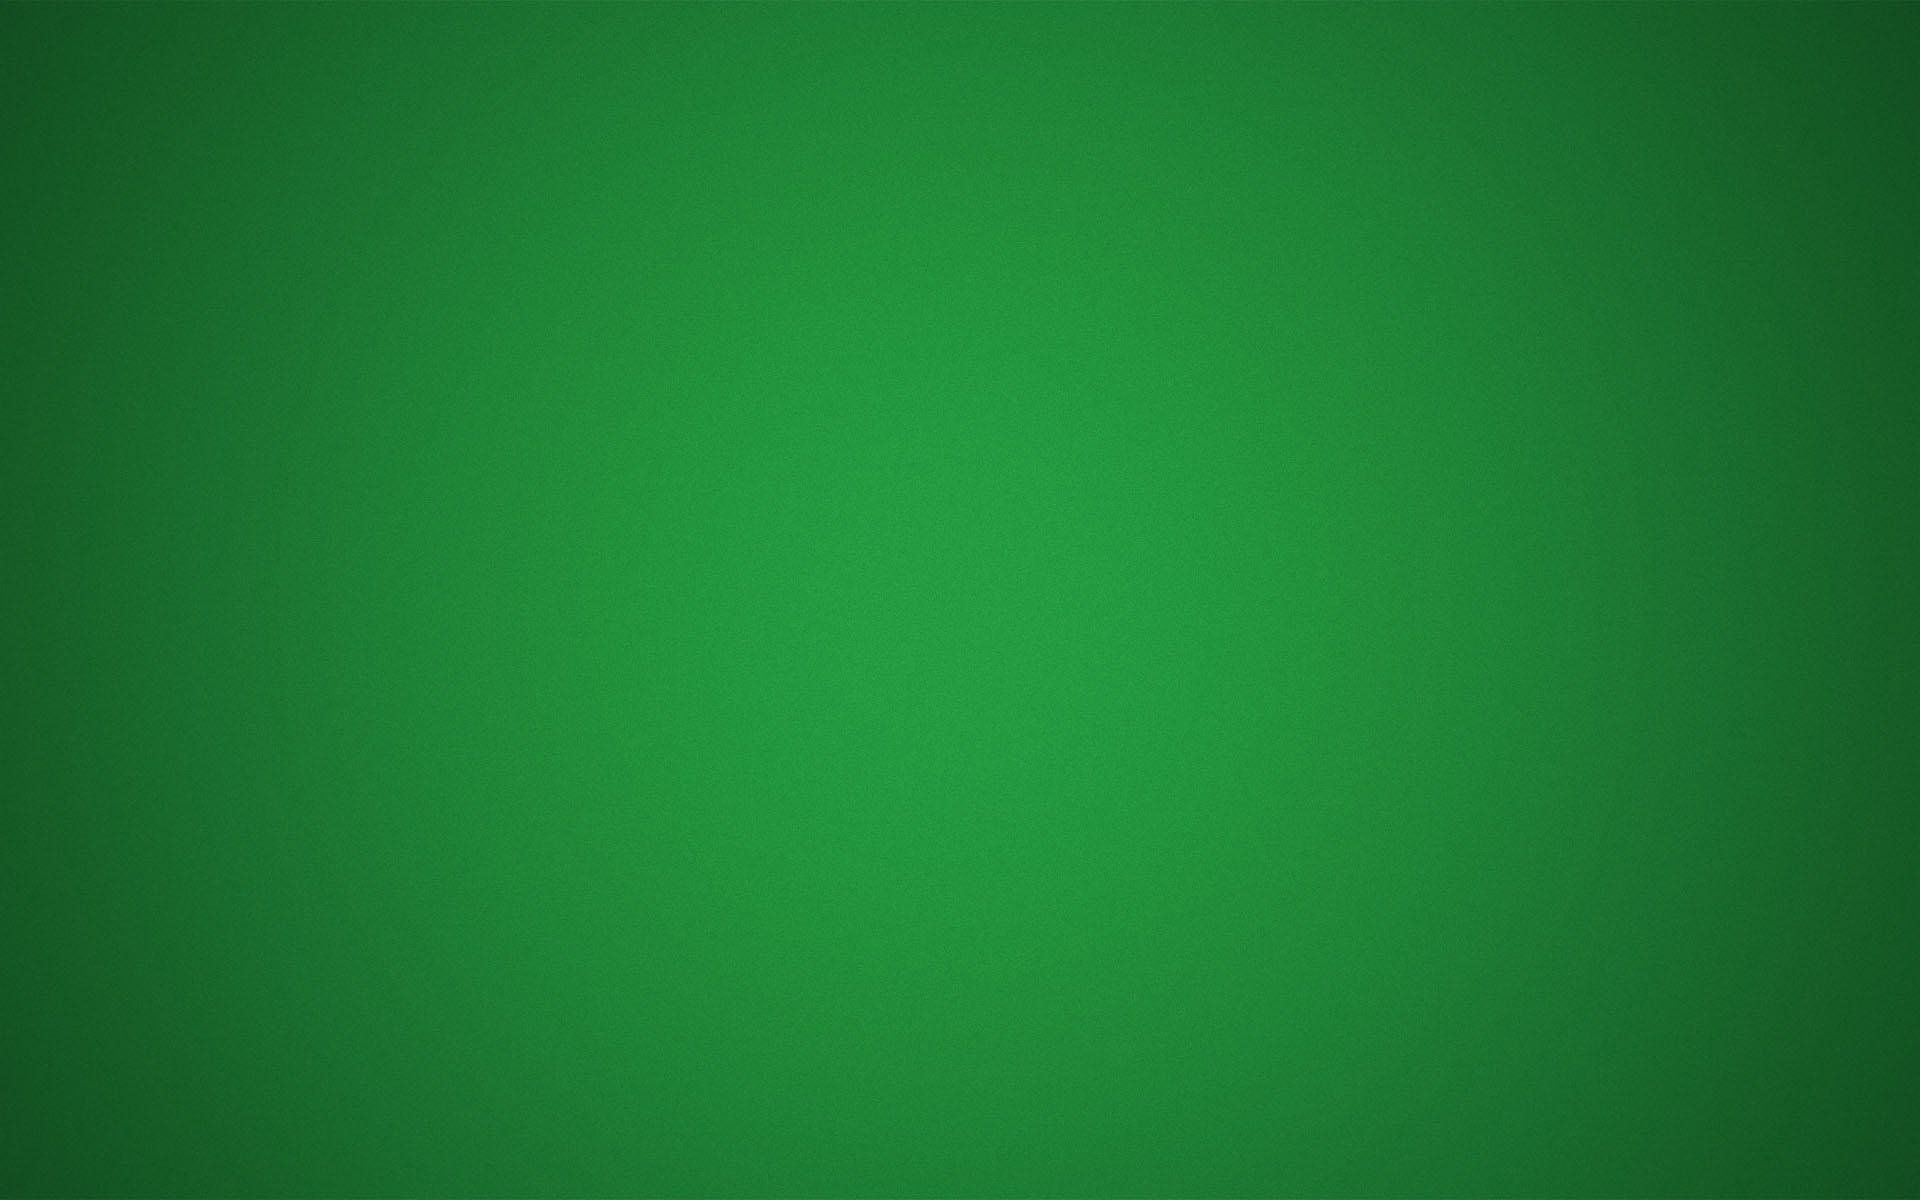 green felt solitaire